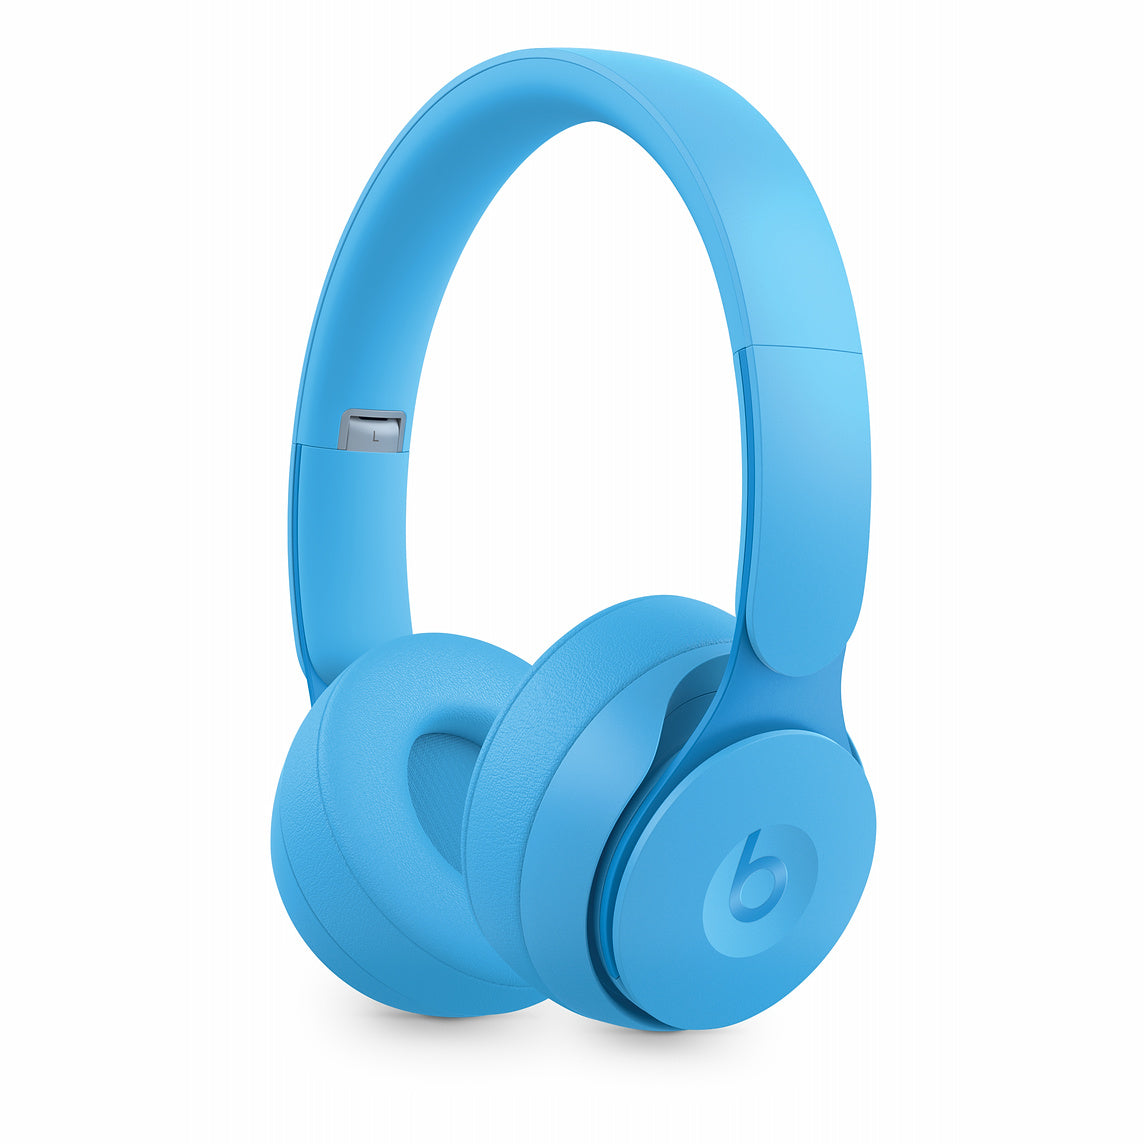 Beats Solo Pro Wireless Noise Cancelling On-Ear Headphones - Light Blue (Pre-Owned)